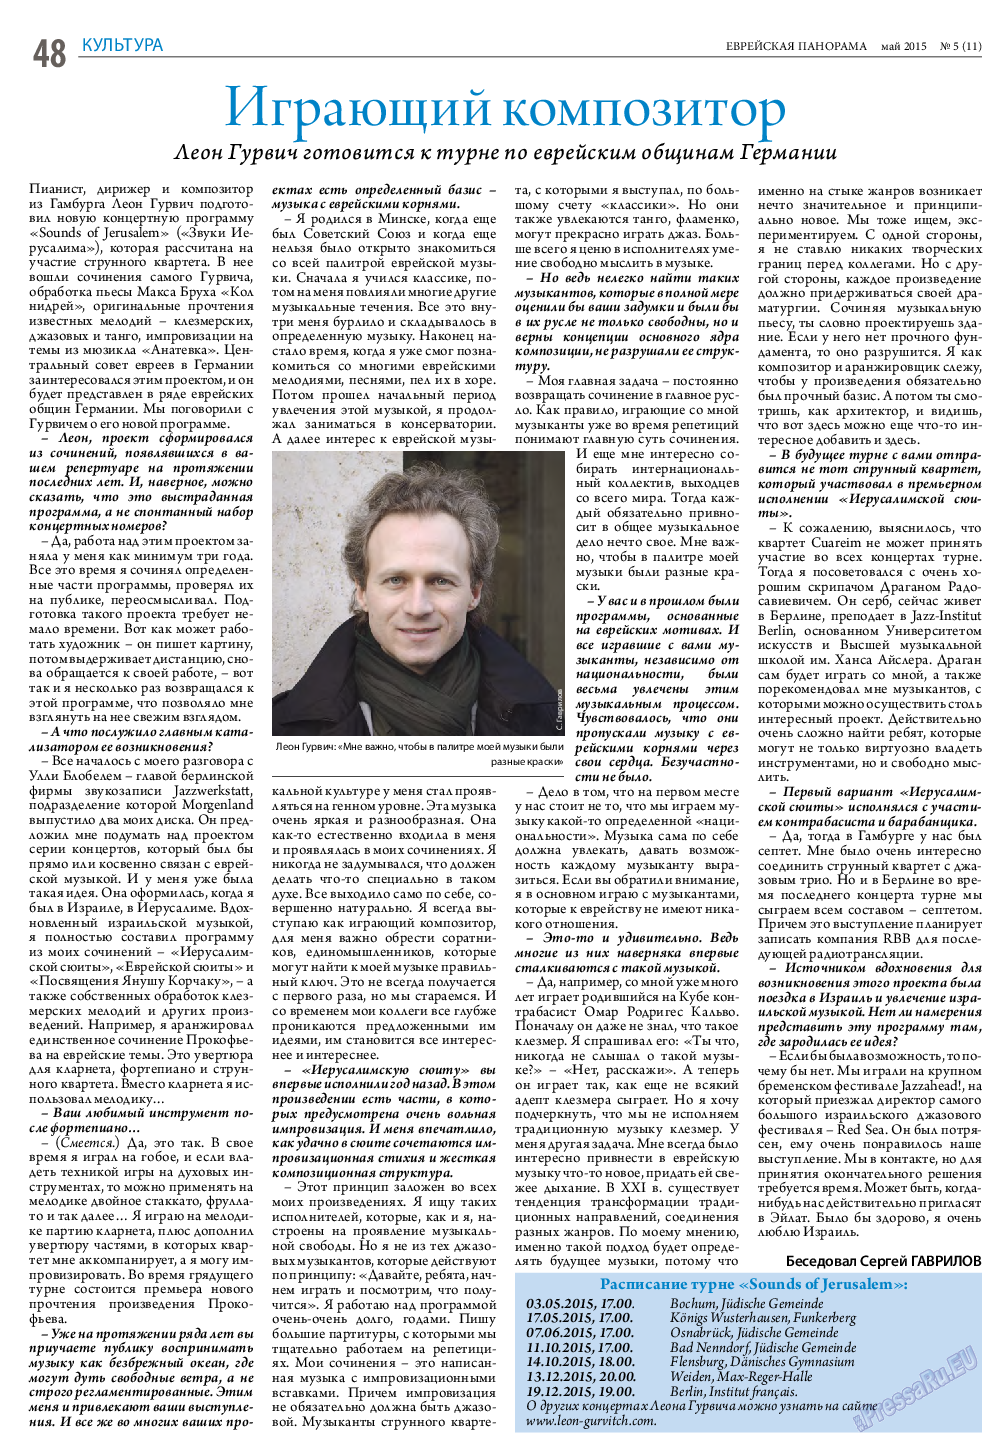 Еврейская панорама, газета. 2015 №5 стр.48